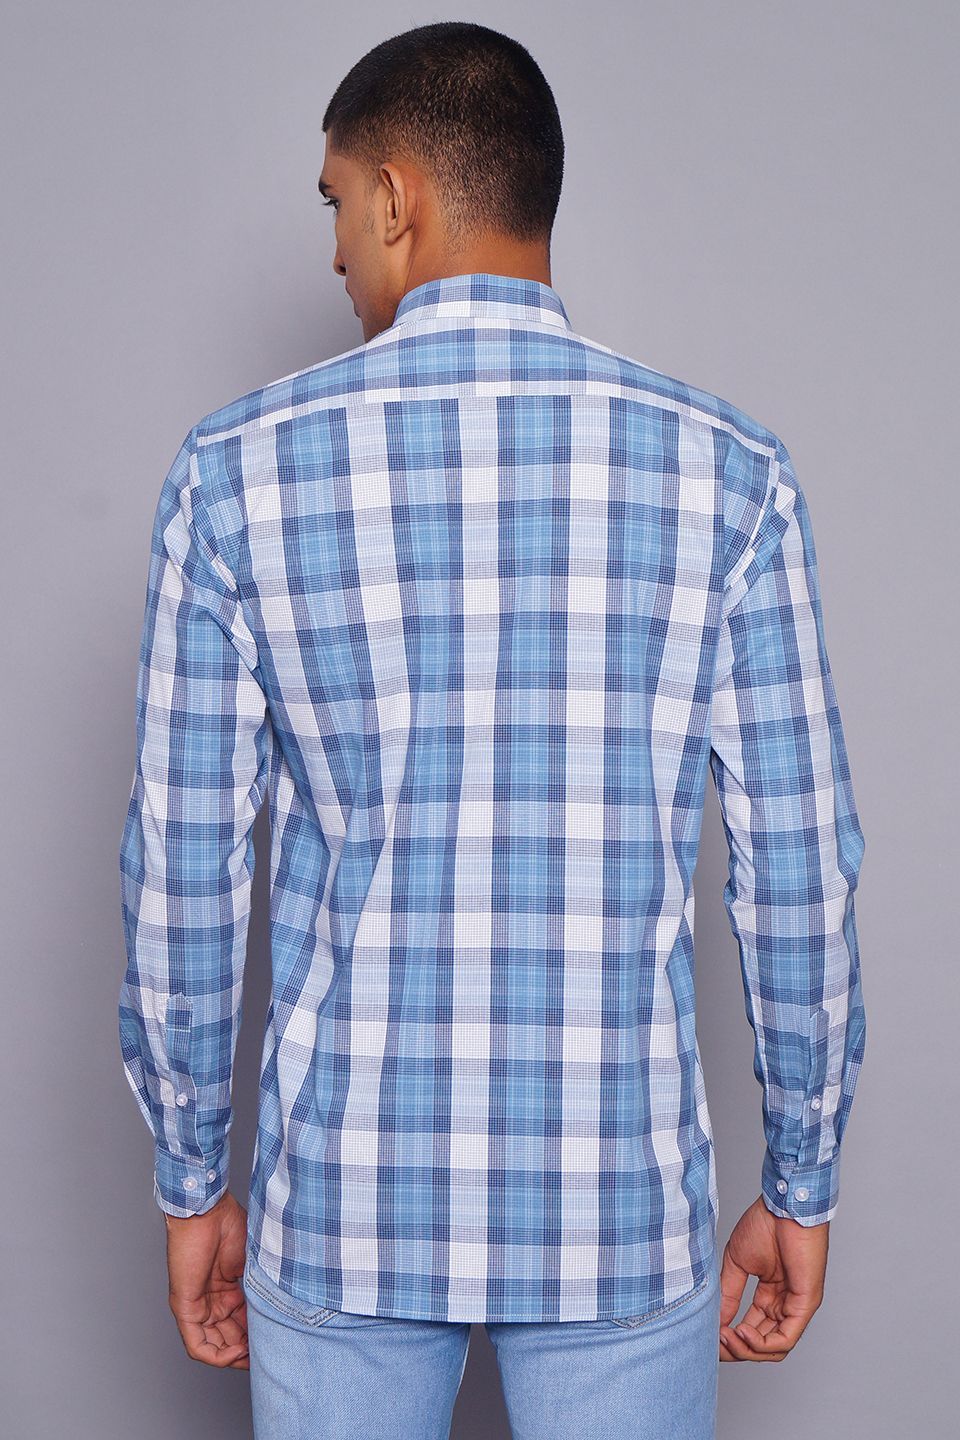 100% Premium Cotton Blue Check Shirt